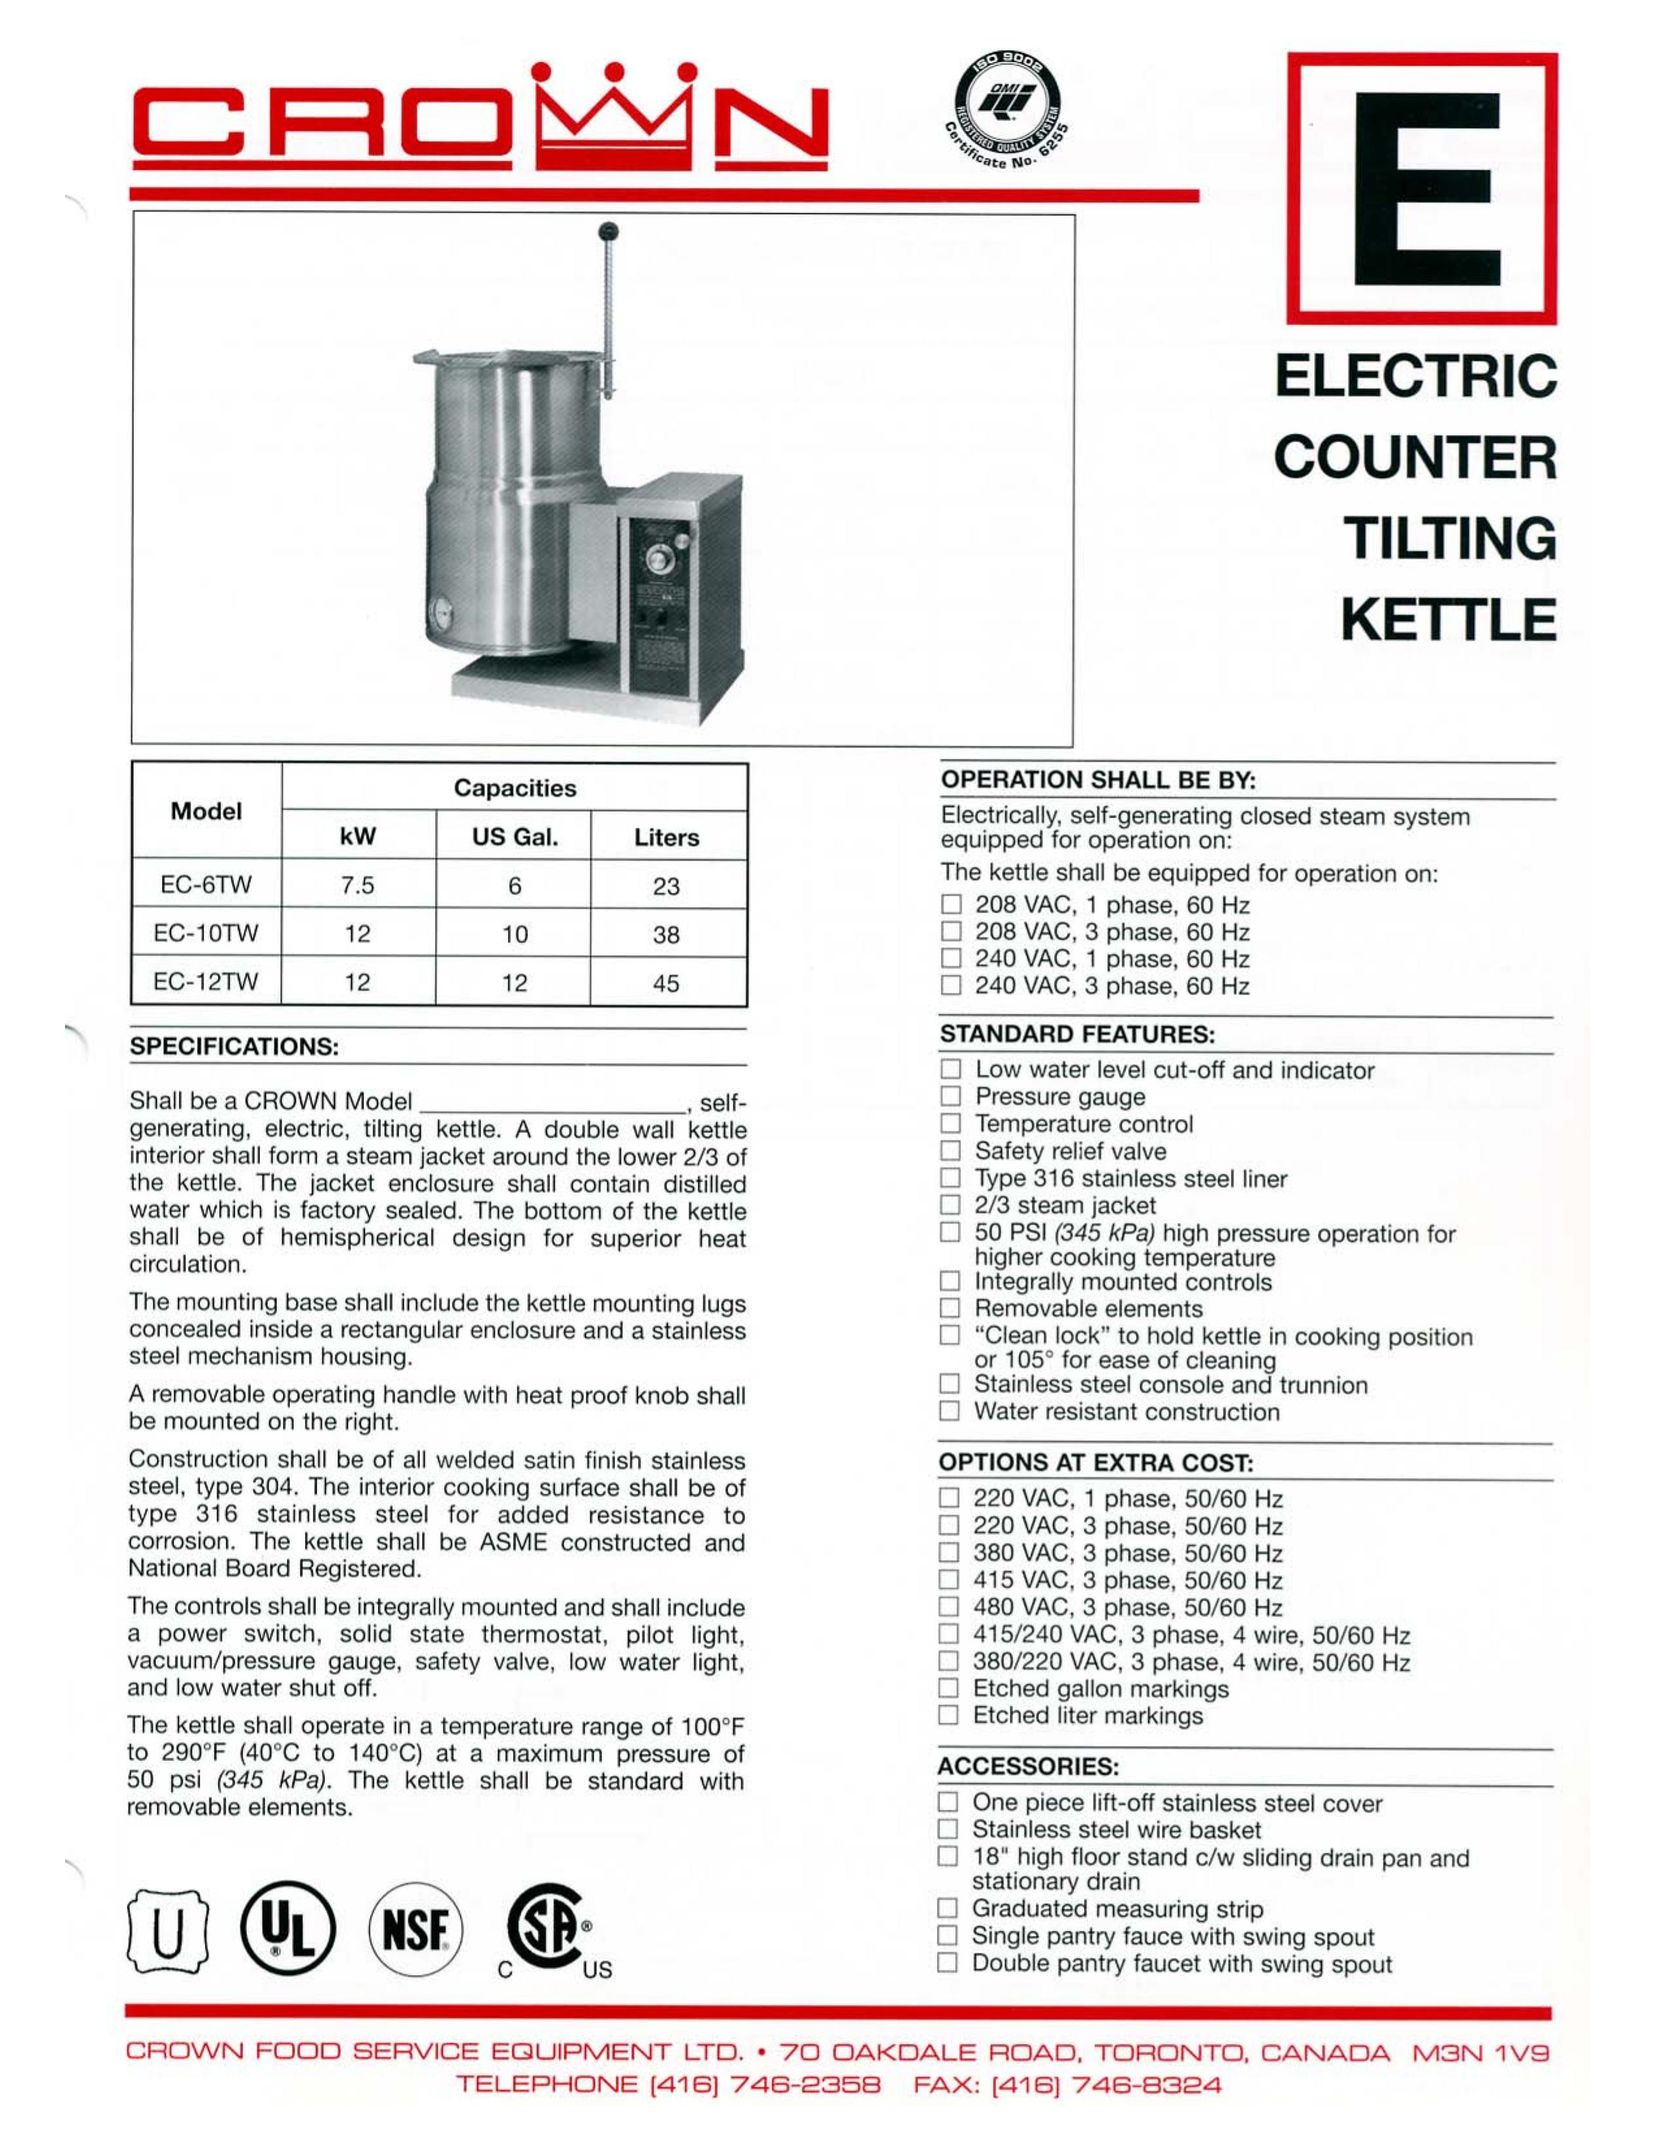 Crown Equipment EC-6TW Hot Beverage Maker User Manual